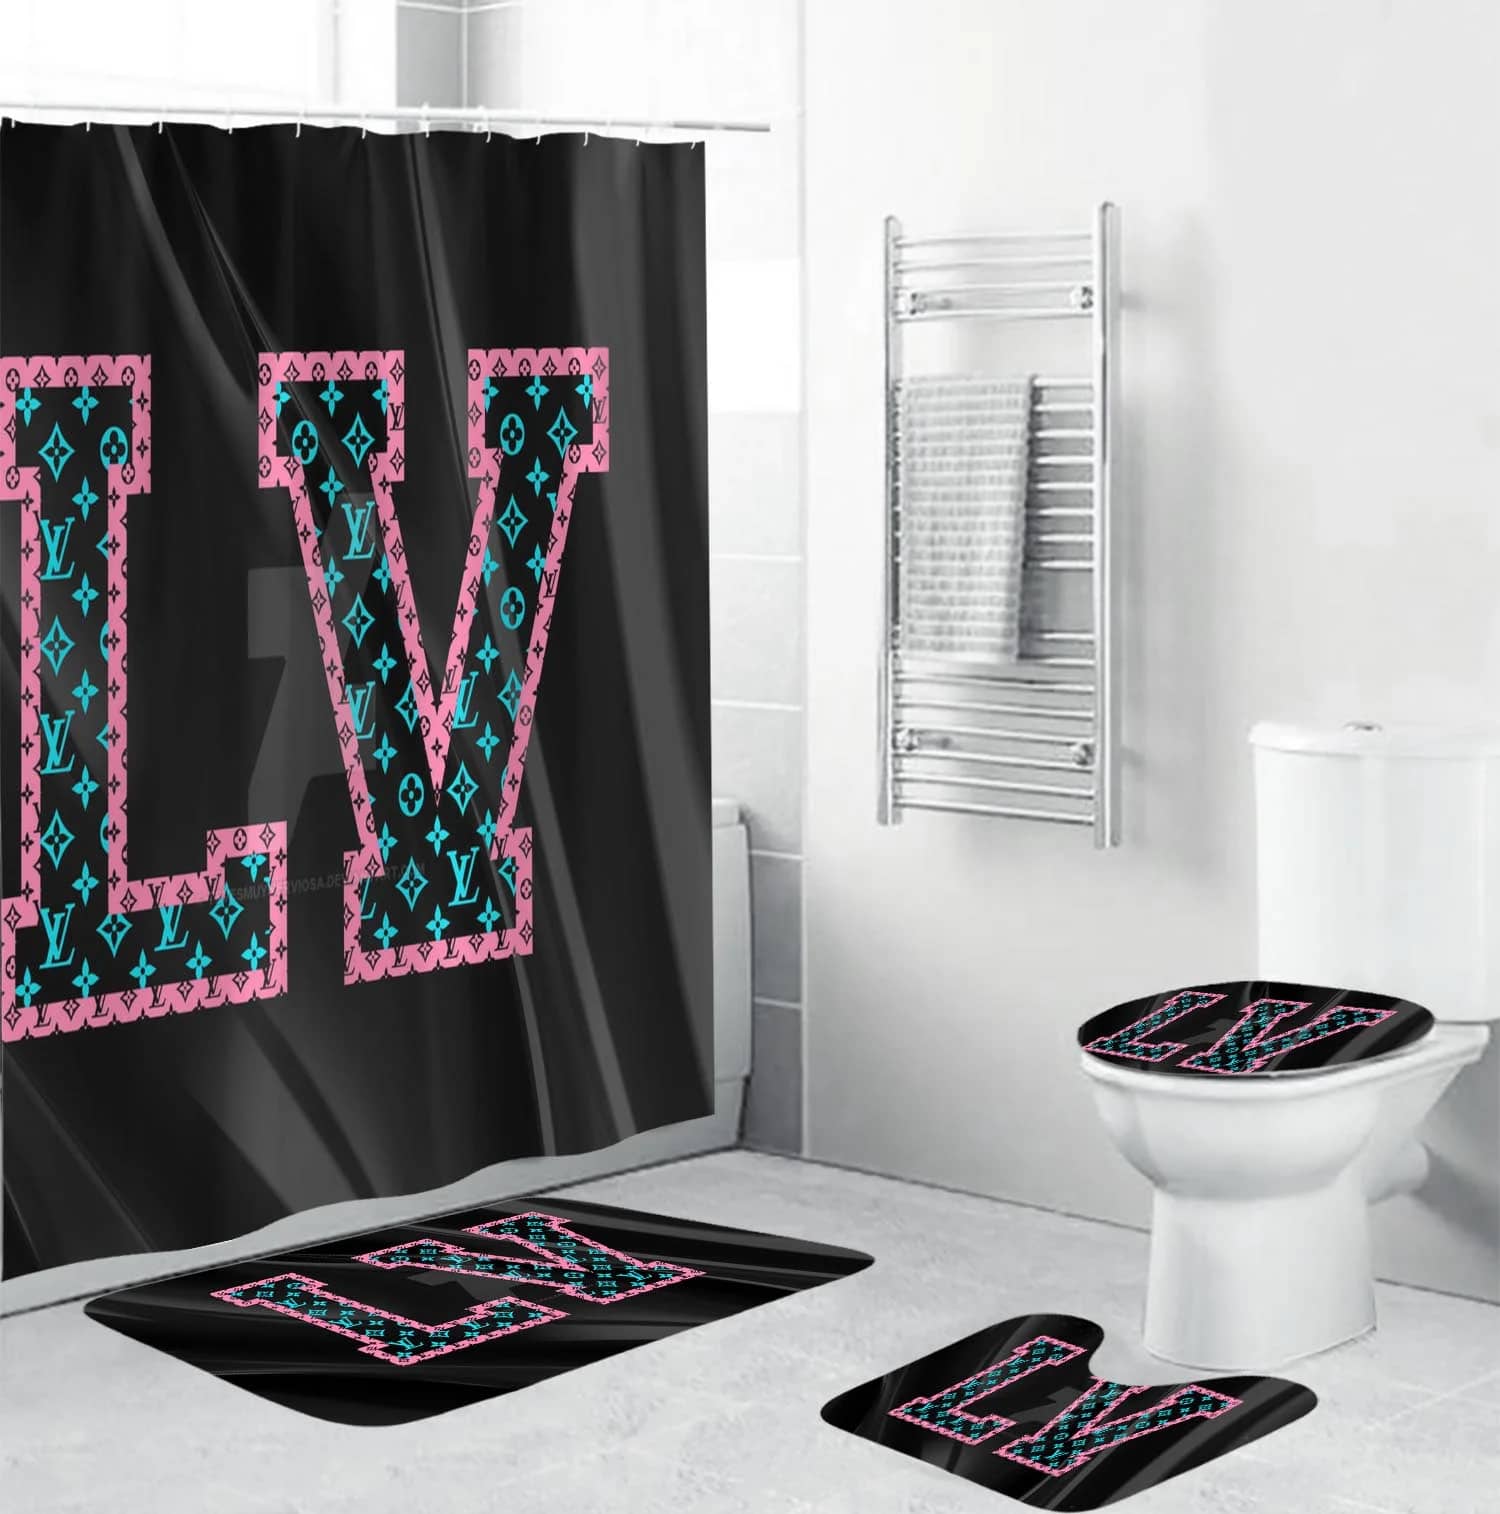 Louis Vuitton Premium Logo Luxury Brand Bathroom Sets